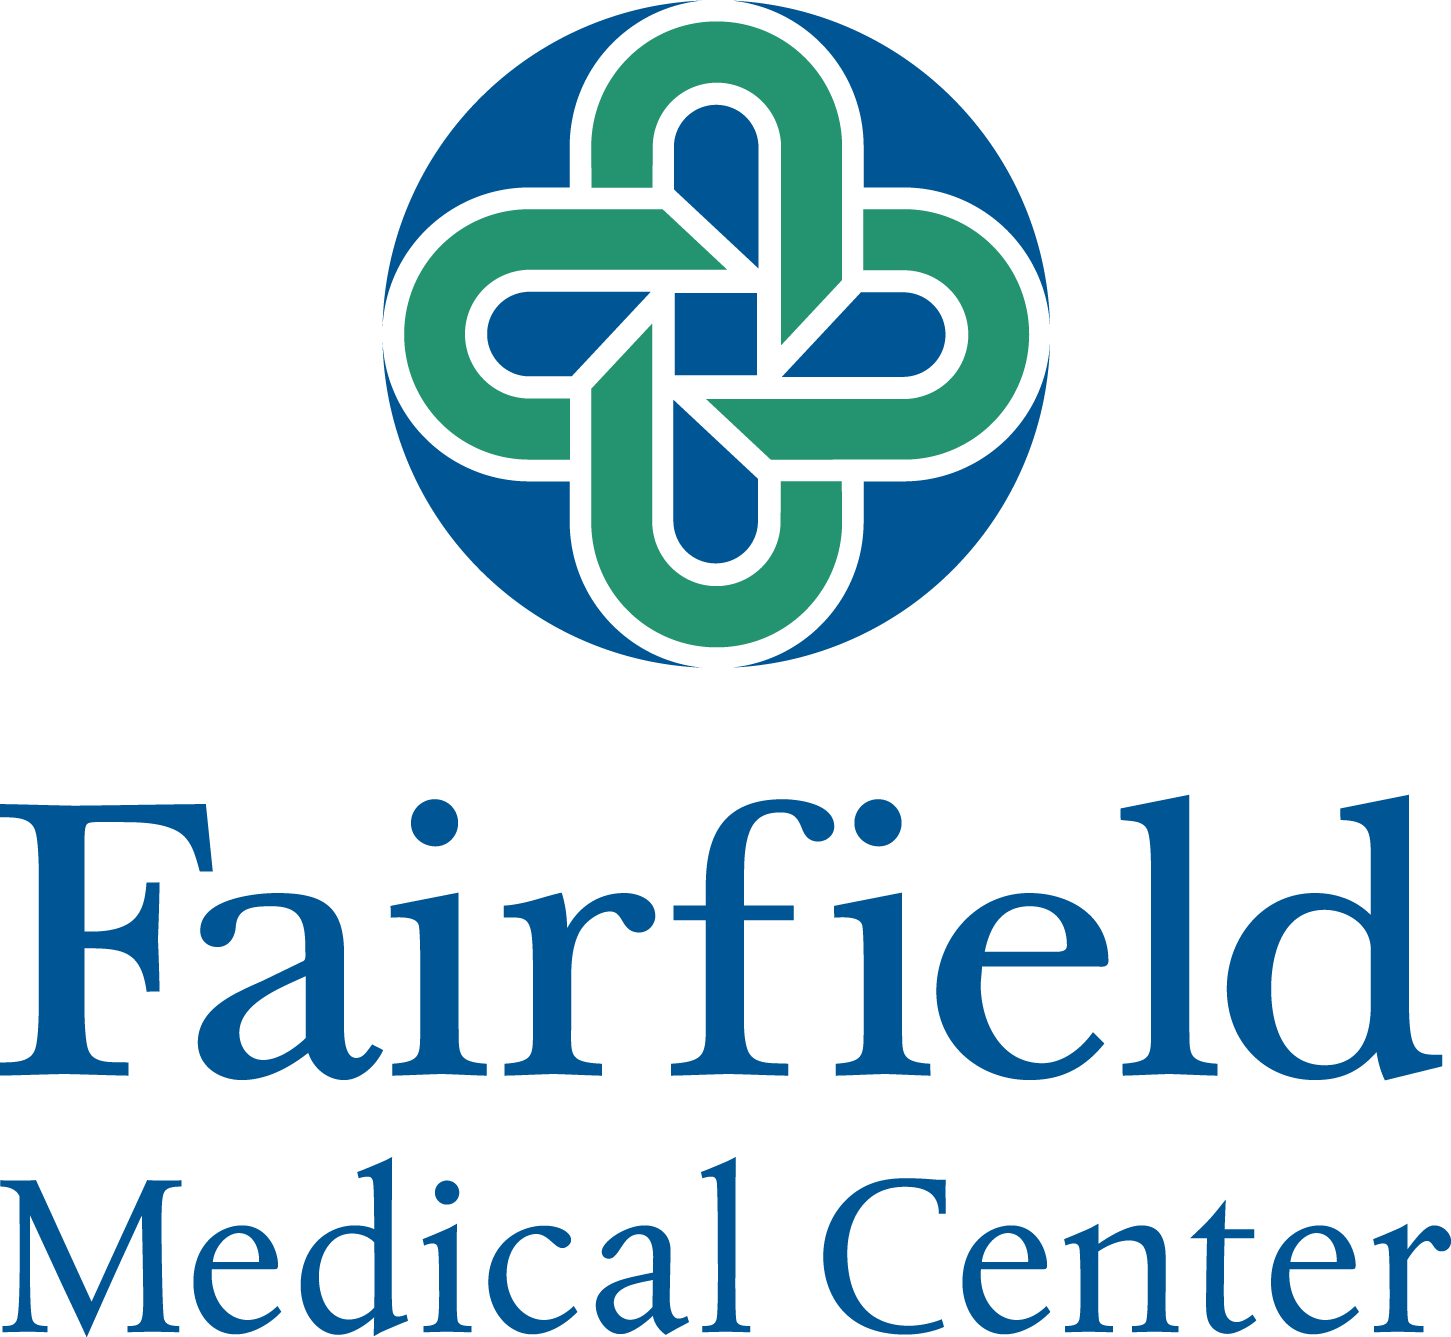 Fairfield Medical Center Logo